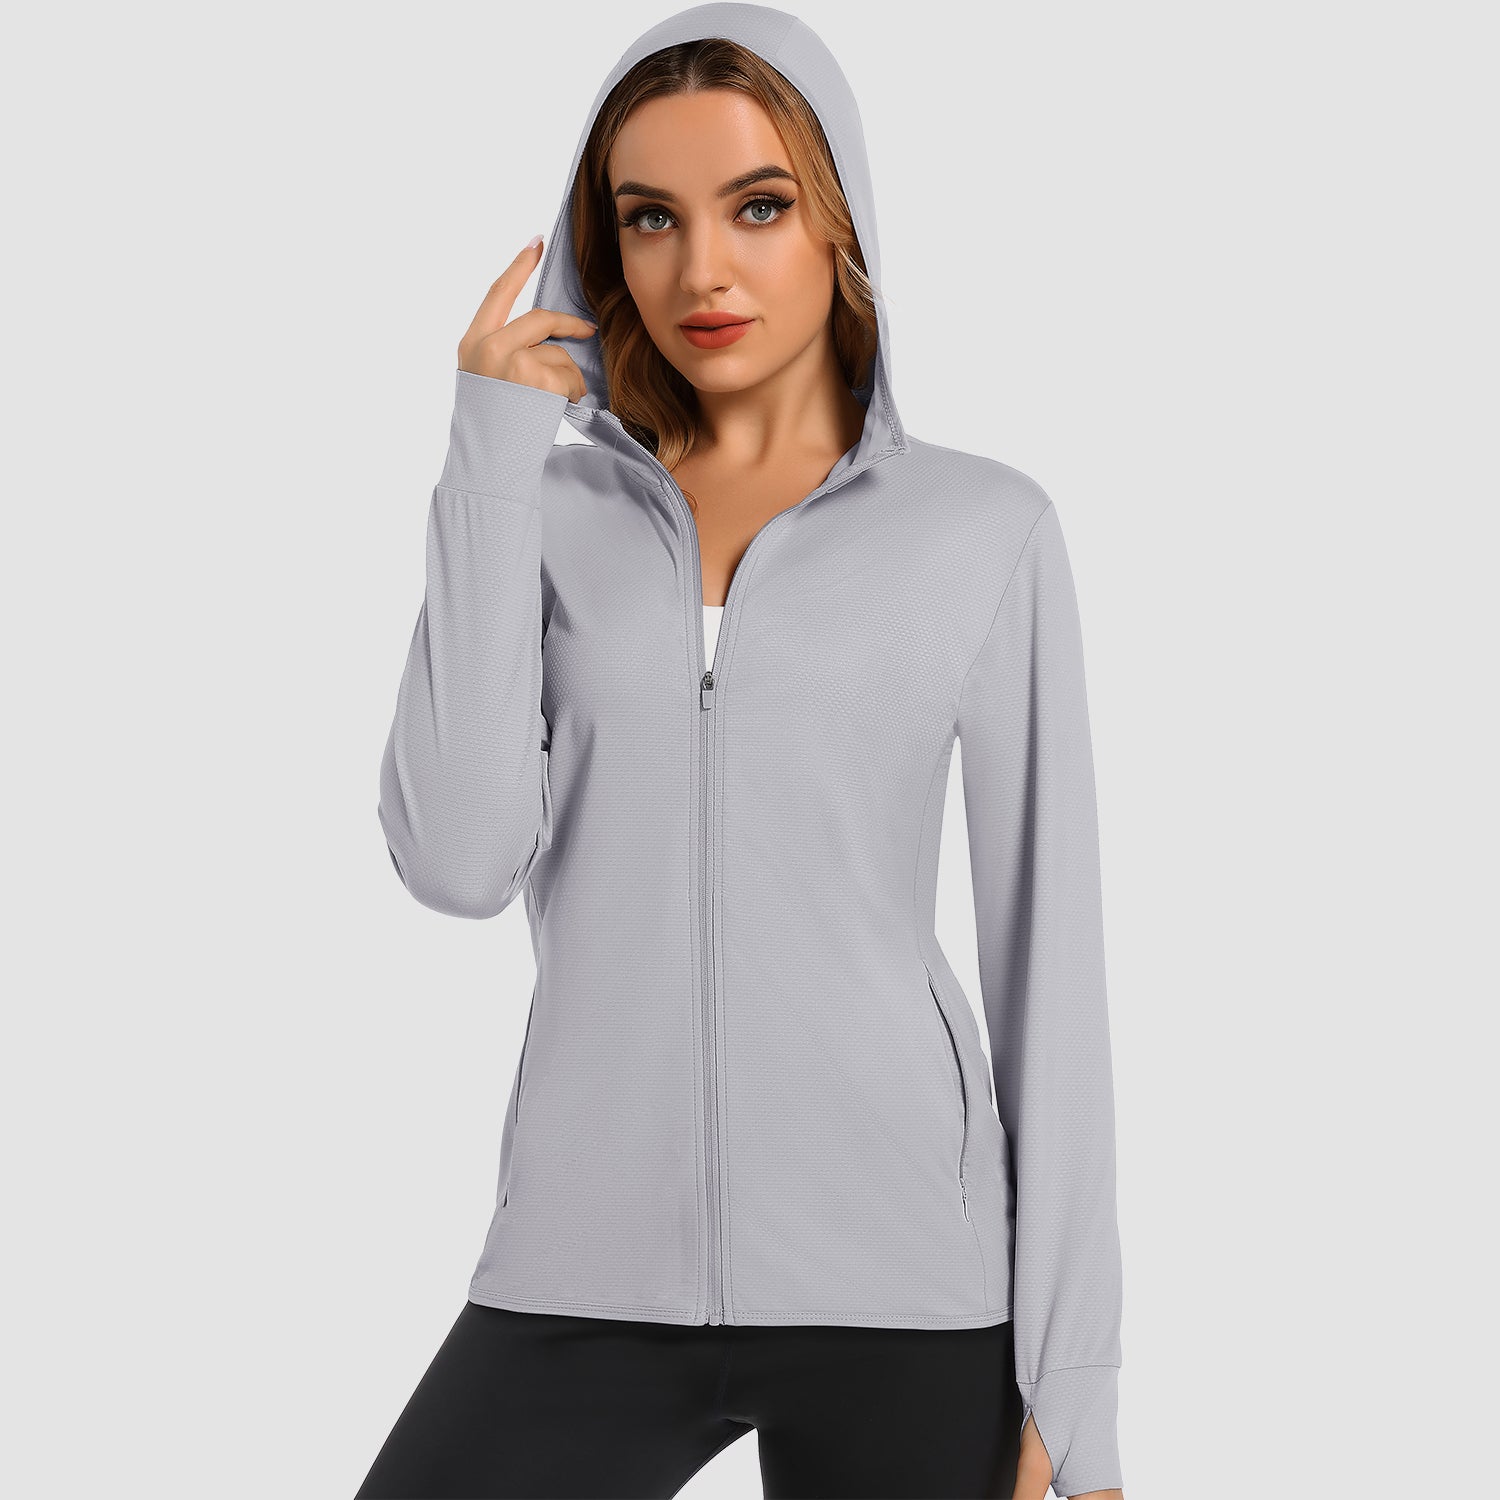 Women's UV Sun Protection Coat Shirts Long Sleeve Quick Dry Workout Hiking Athletic Jacket, Light Grey / XL